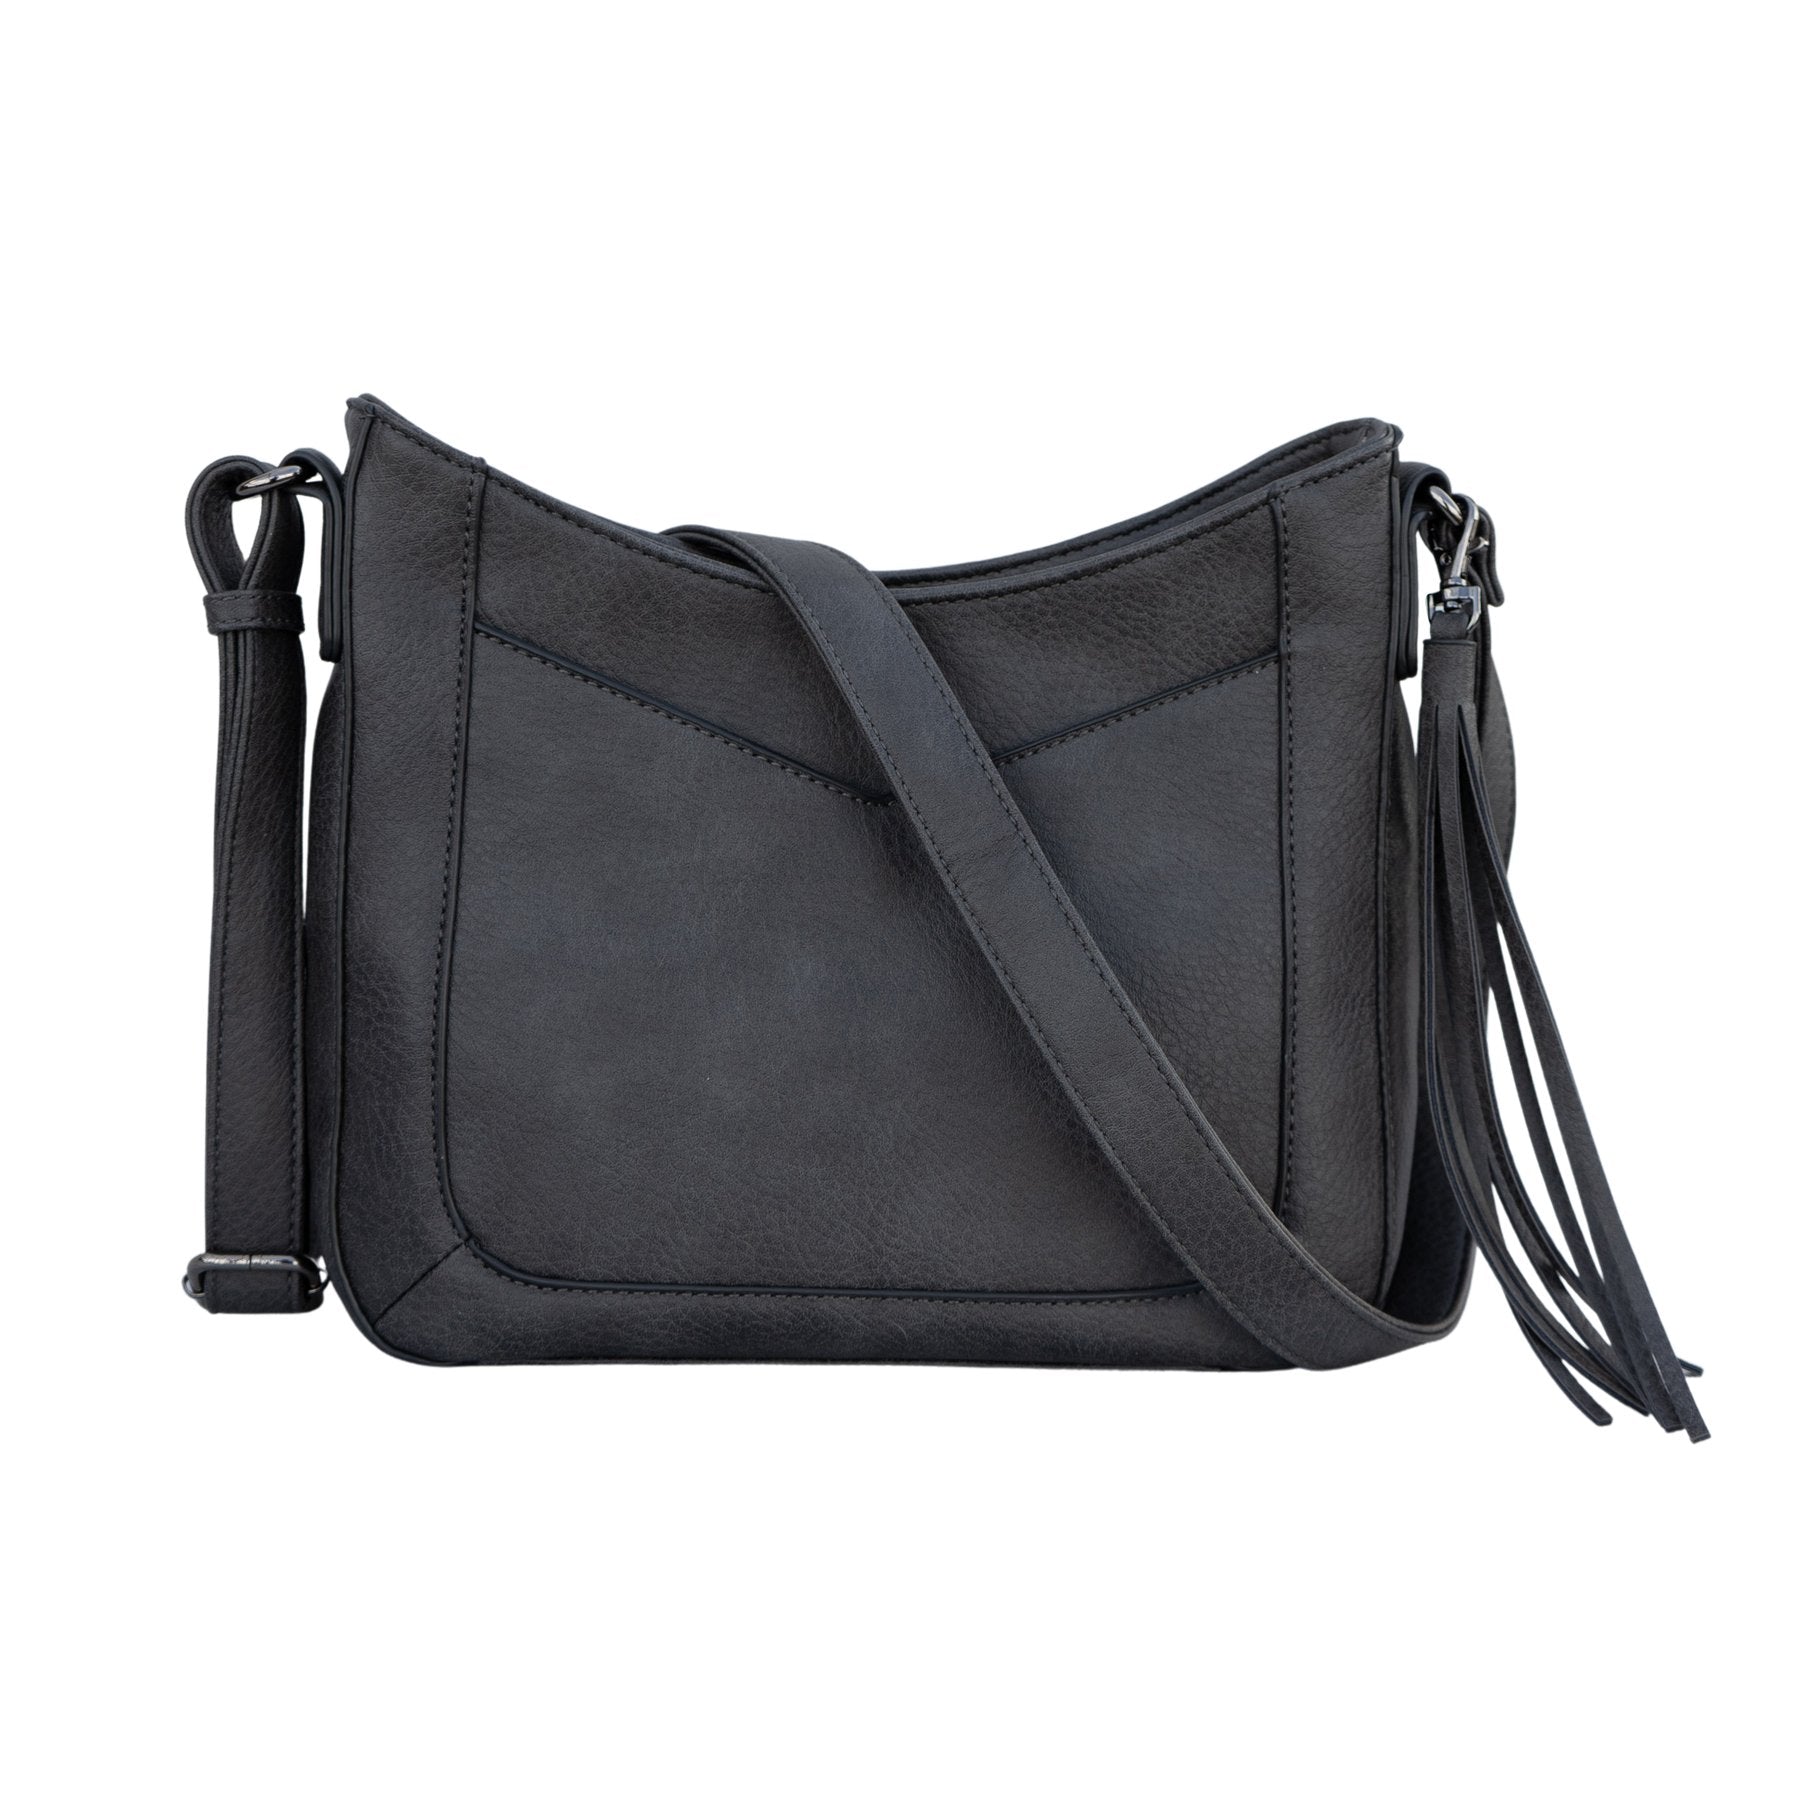 LoyGkgas New Women Hidden Bra Wallet Pickpocket Proof Bag for Money  Valuables Pouch (Black)